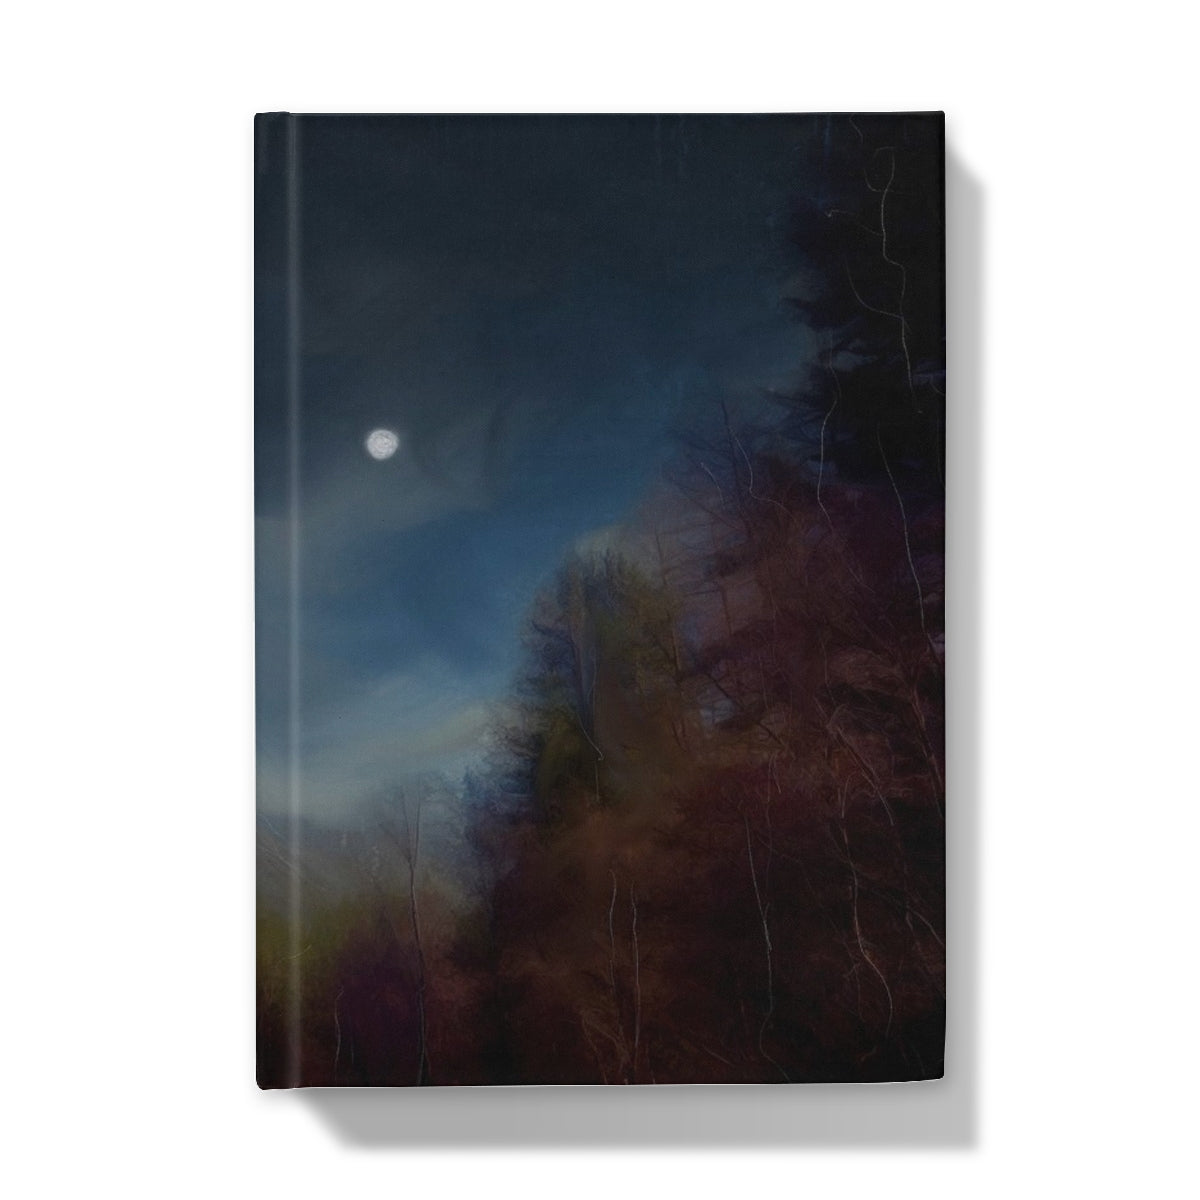 Glencoe Lochan Moonlight Art Gifts Hardback Journal-Journals & Notebooks-Scottish Lochs & Mountains Art Gallery-A4-Lined-Paintings, Prints, Homeware, Art Gifts From Scotland By Scottish Artist Kevin Hunter